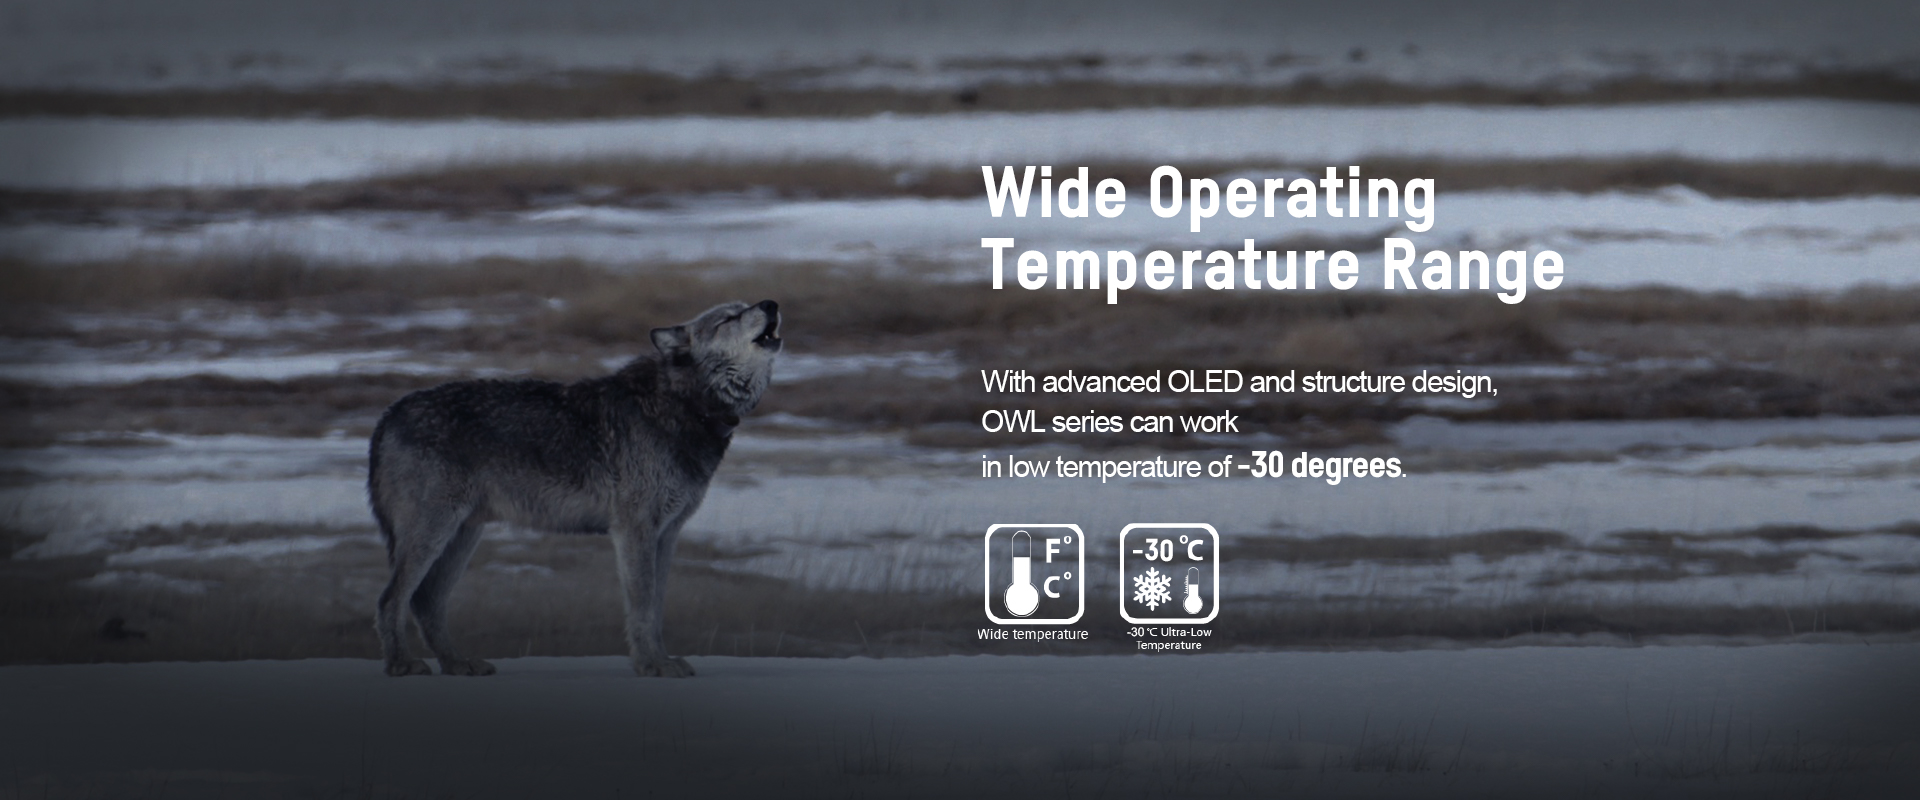 03-Wide Operating Temperature Range_OWL.jpg